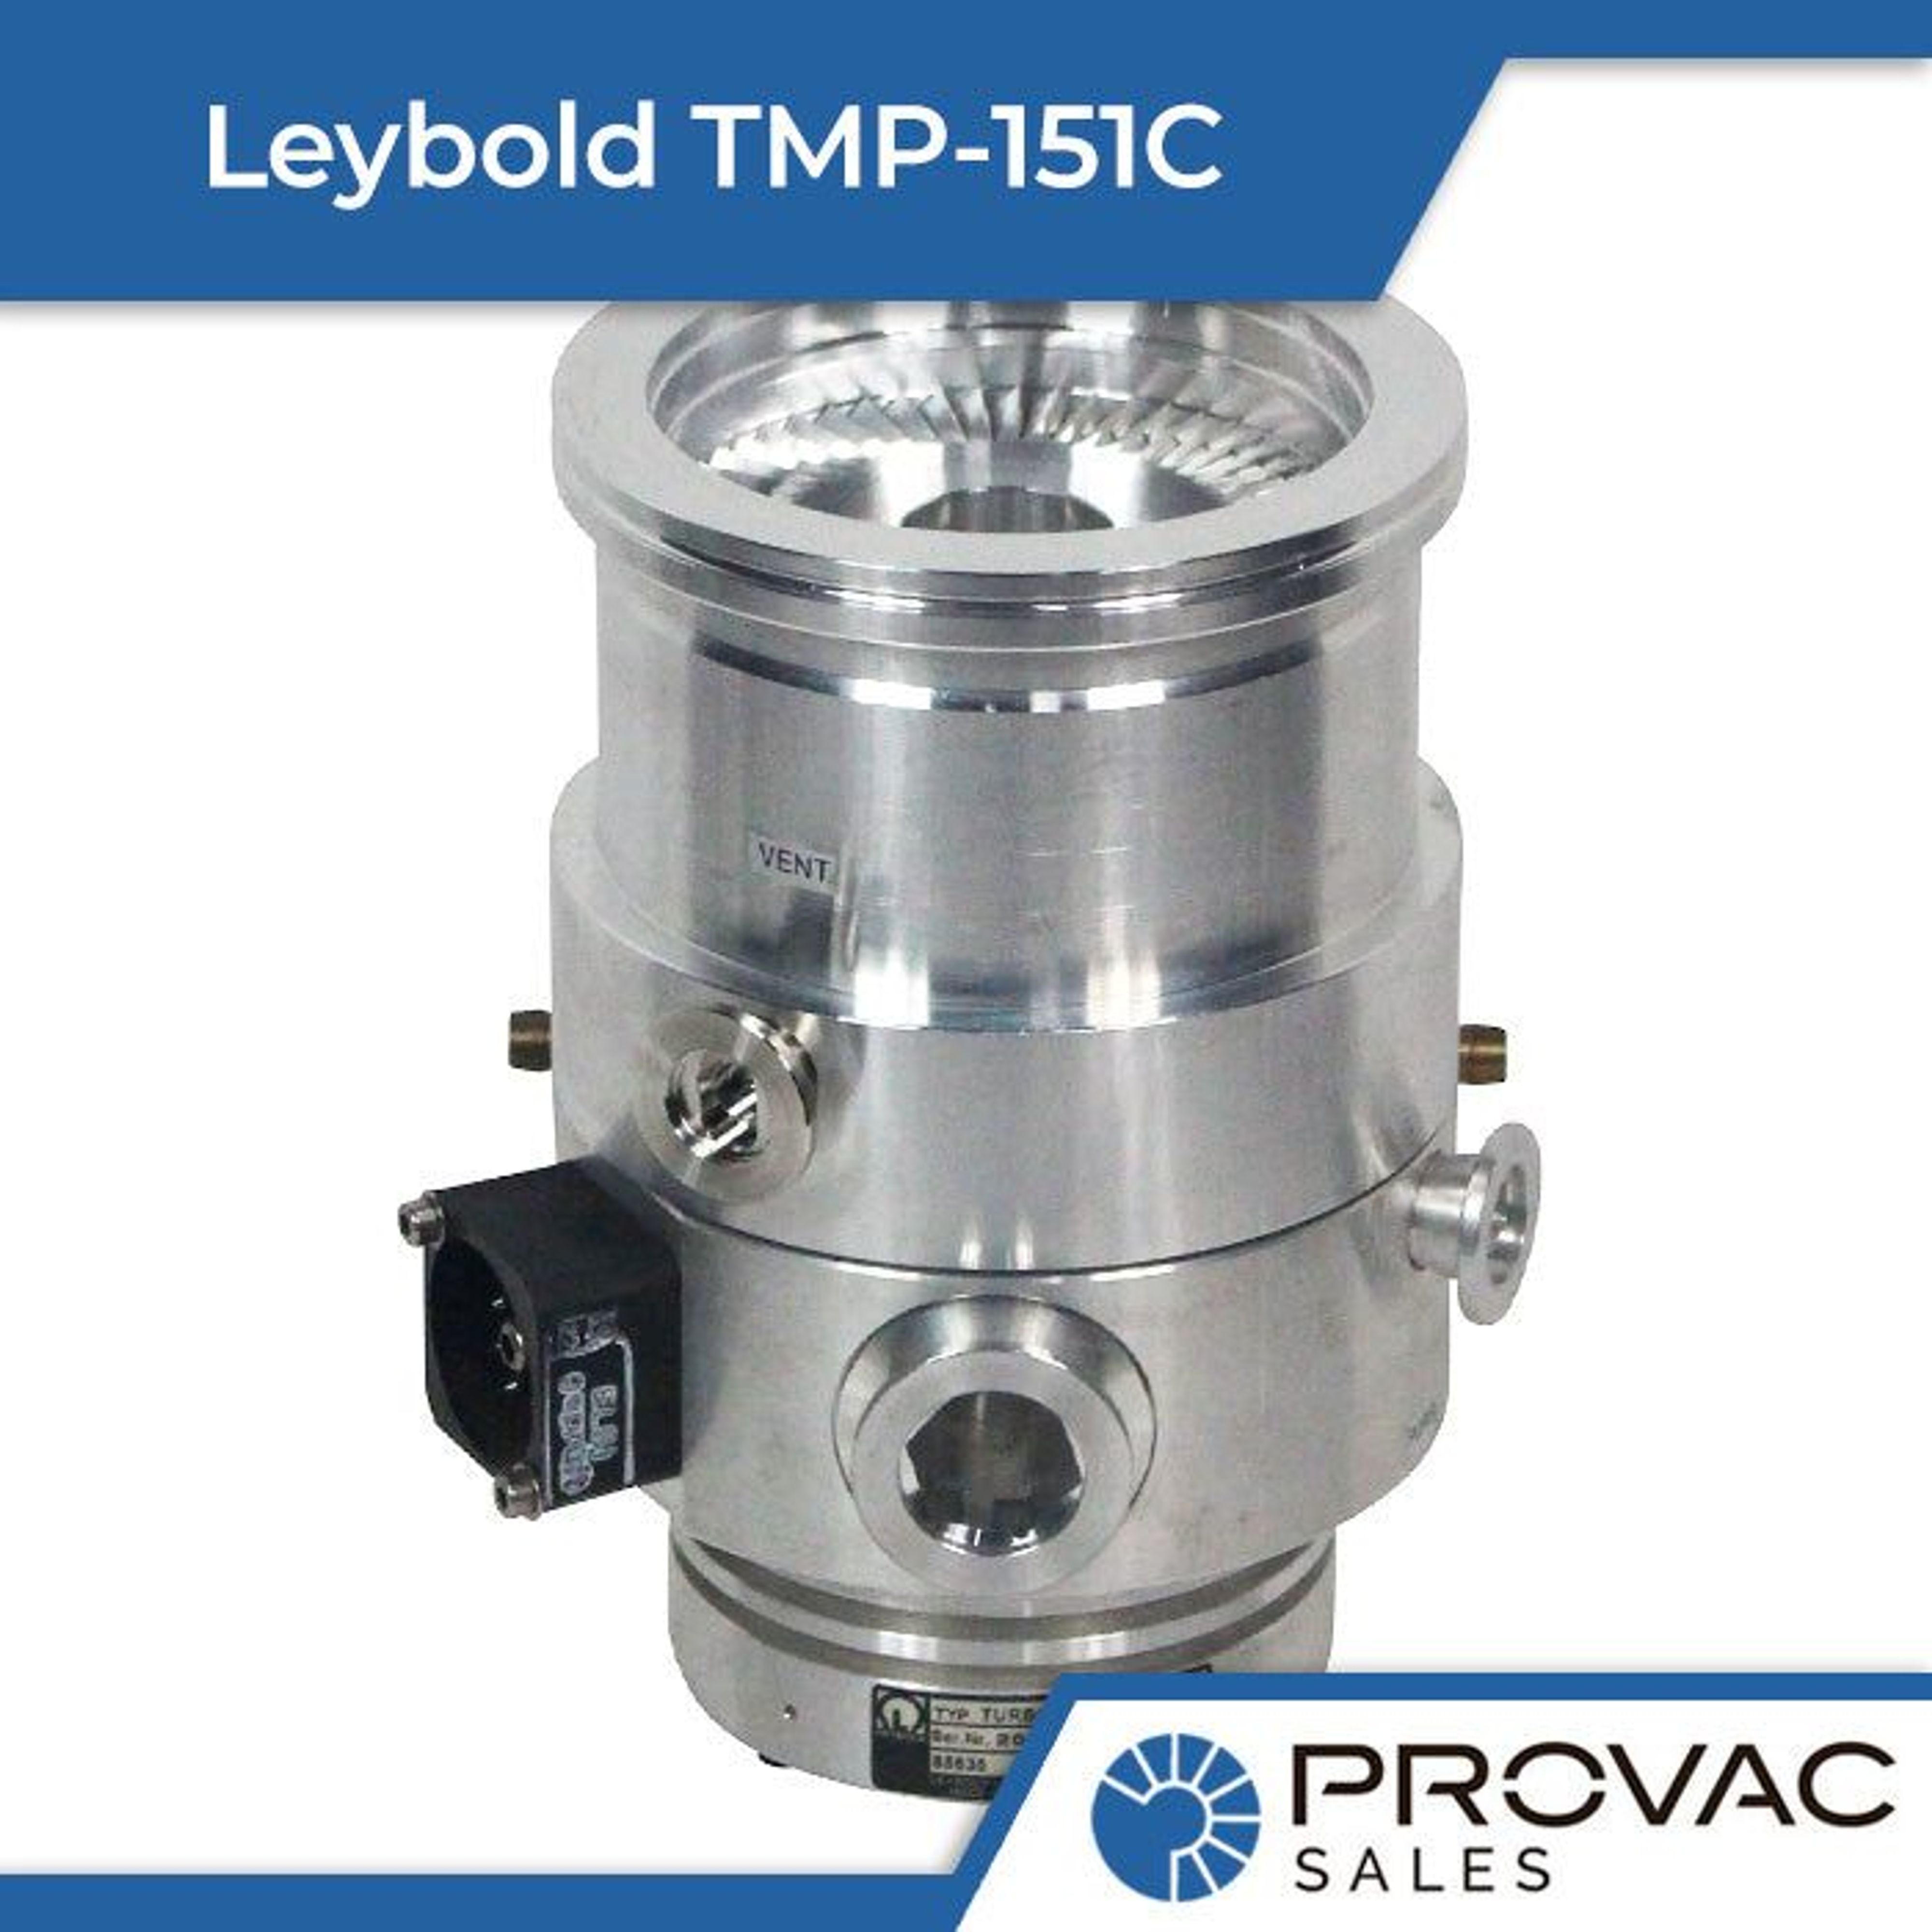 Leybold TMP-151C Turbomolecular Pump Background